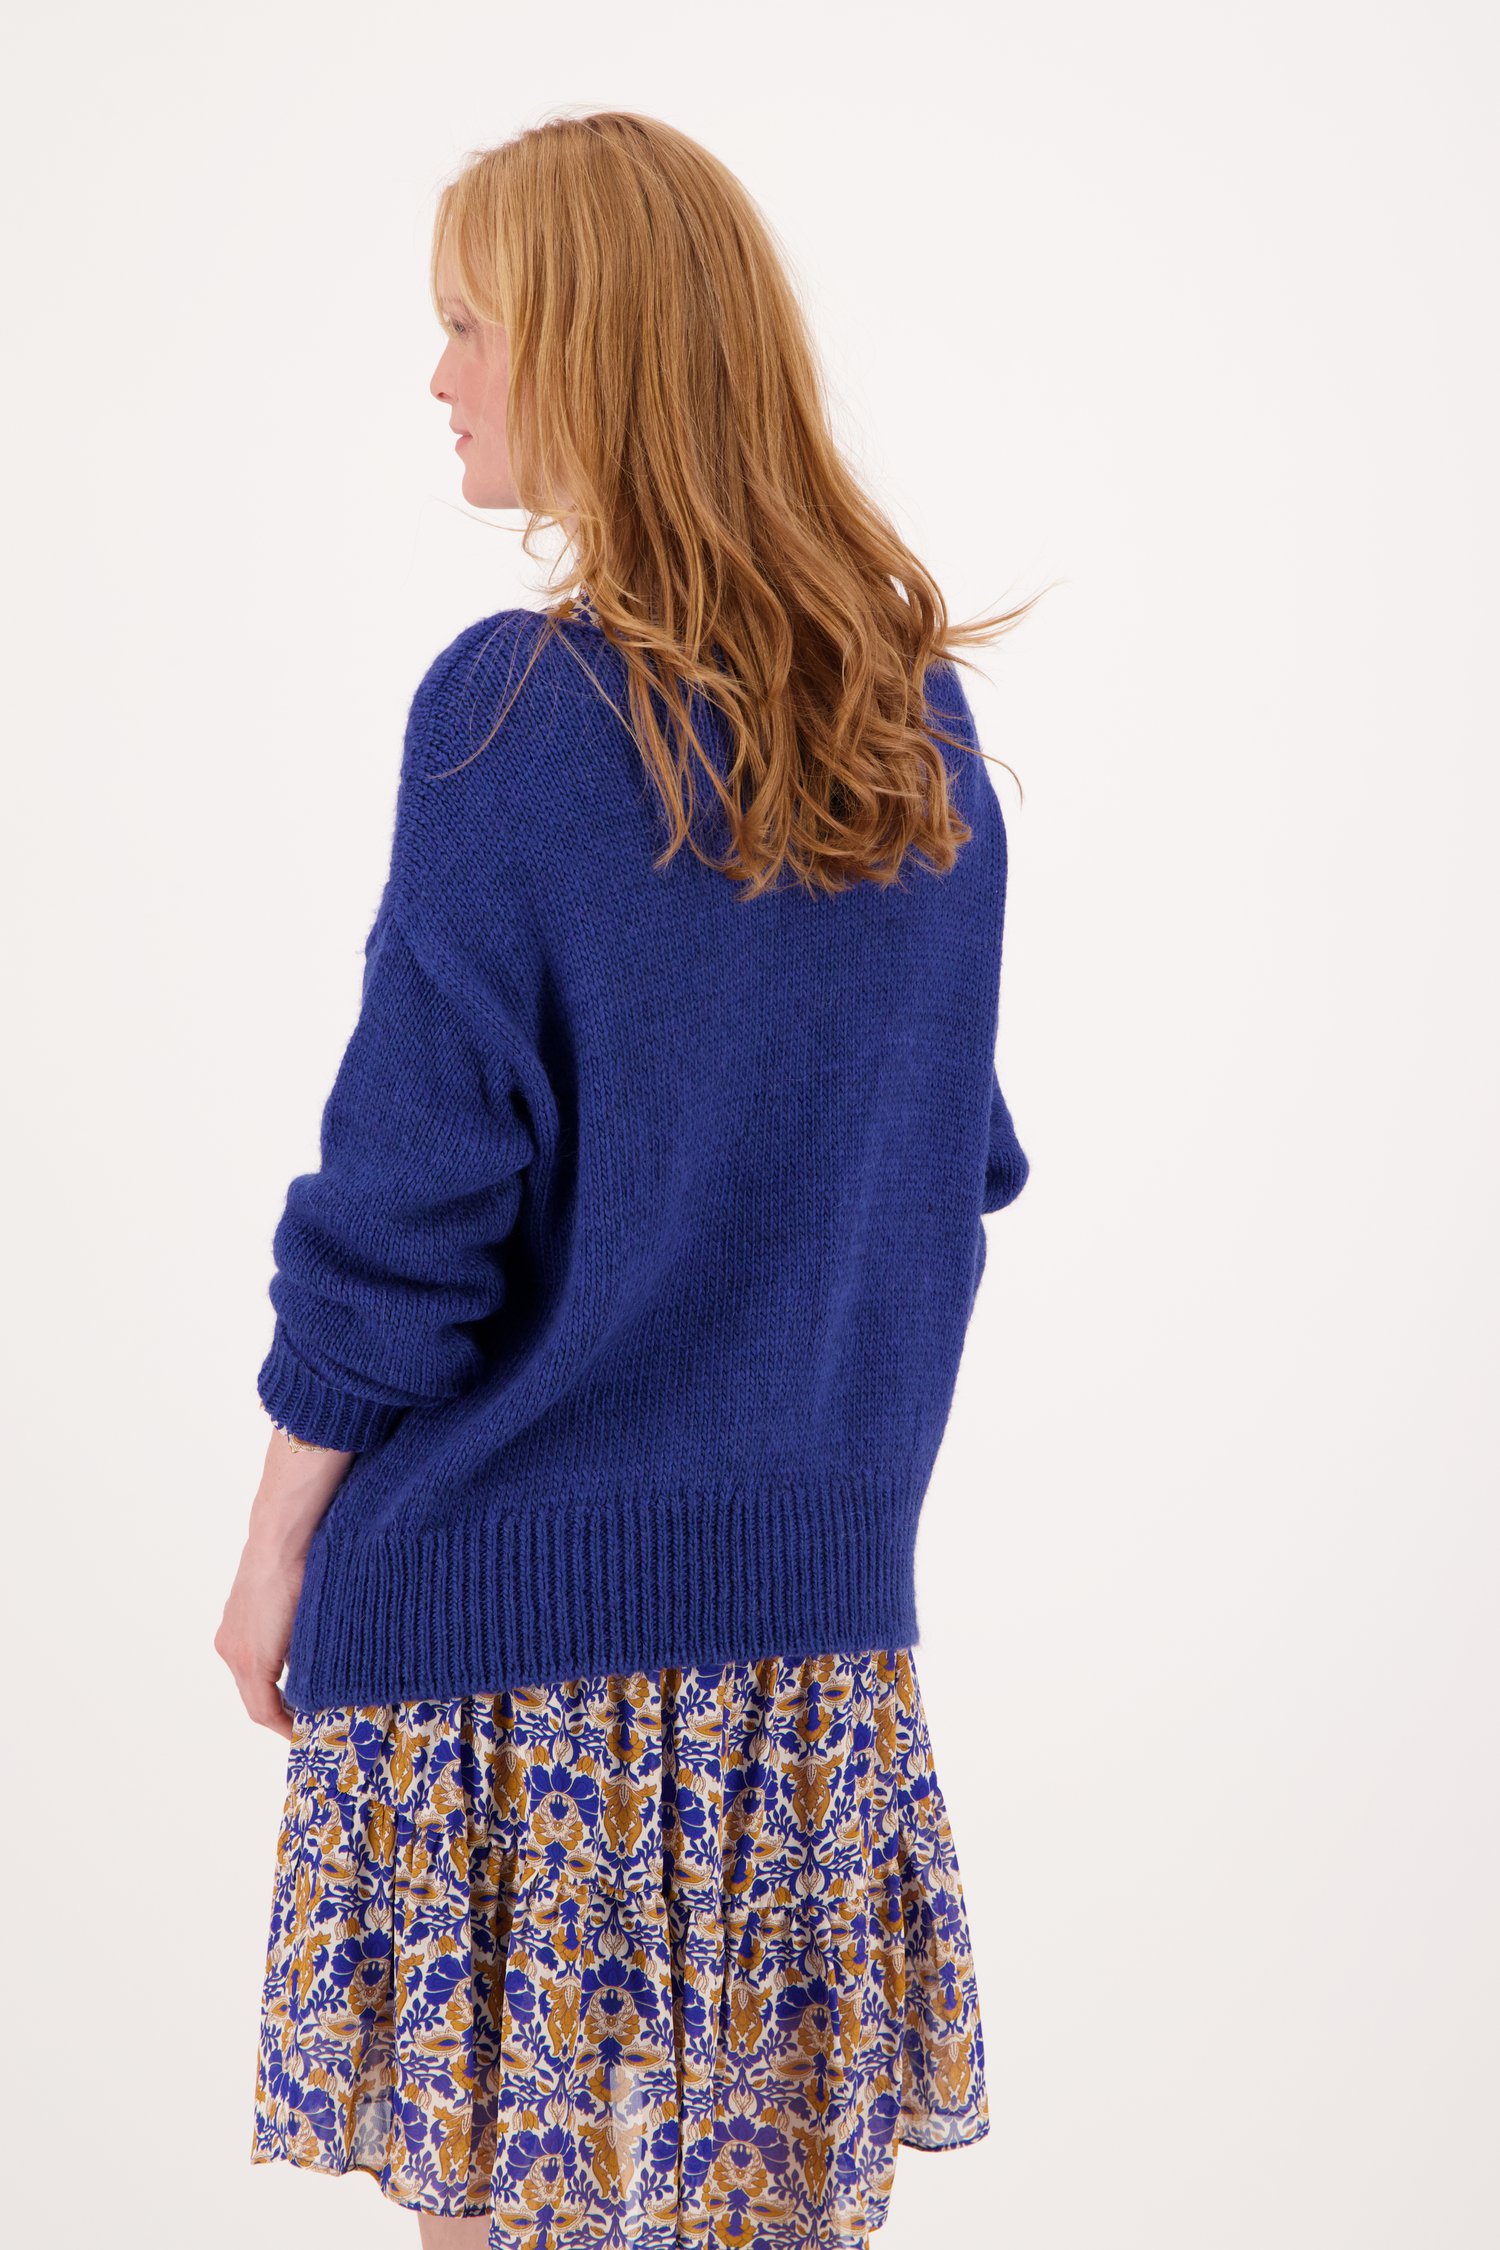 Gehaakte donkerblauwe trui met patroon van More & More voor Dames